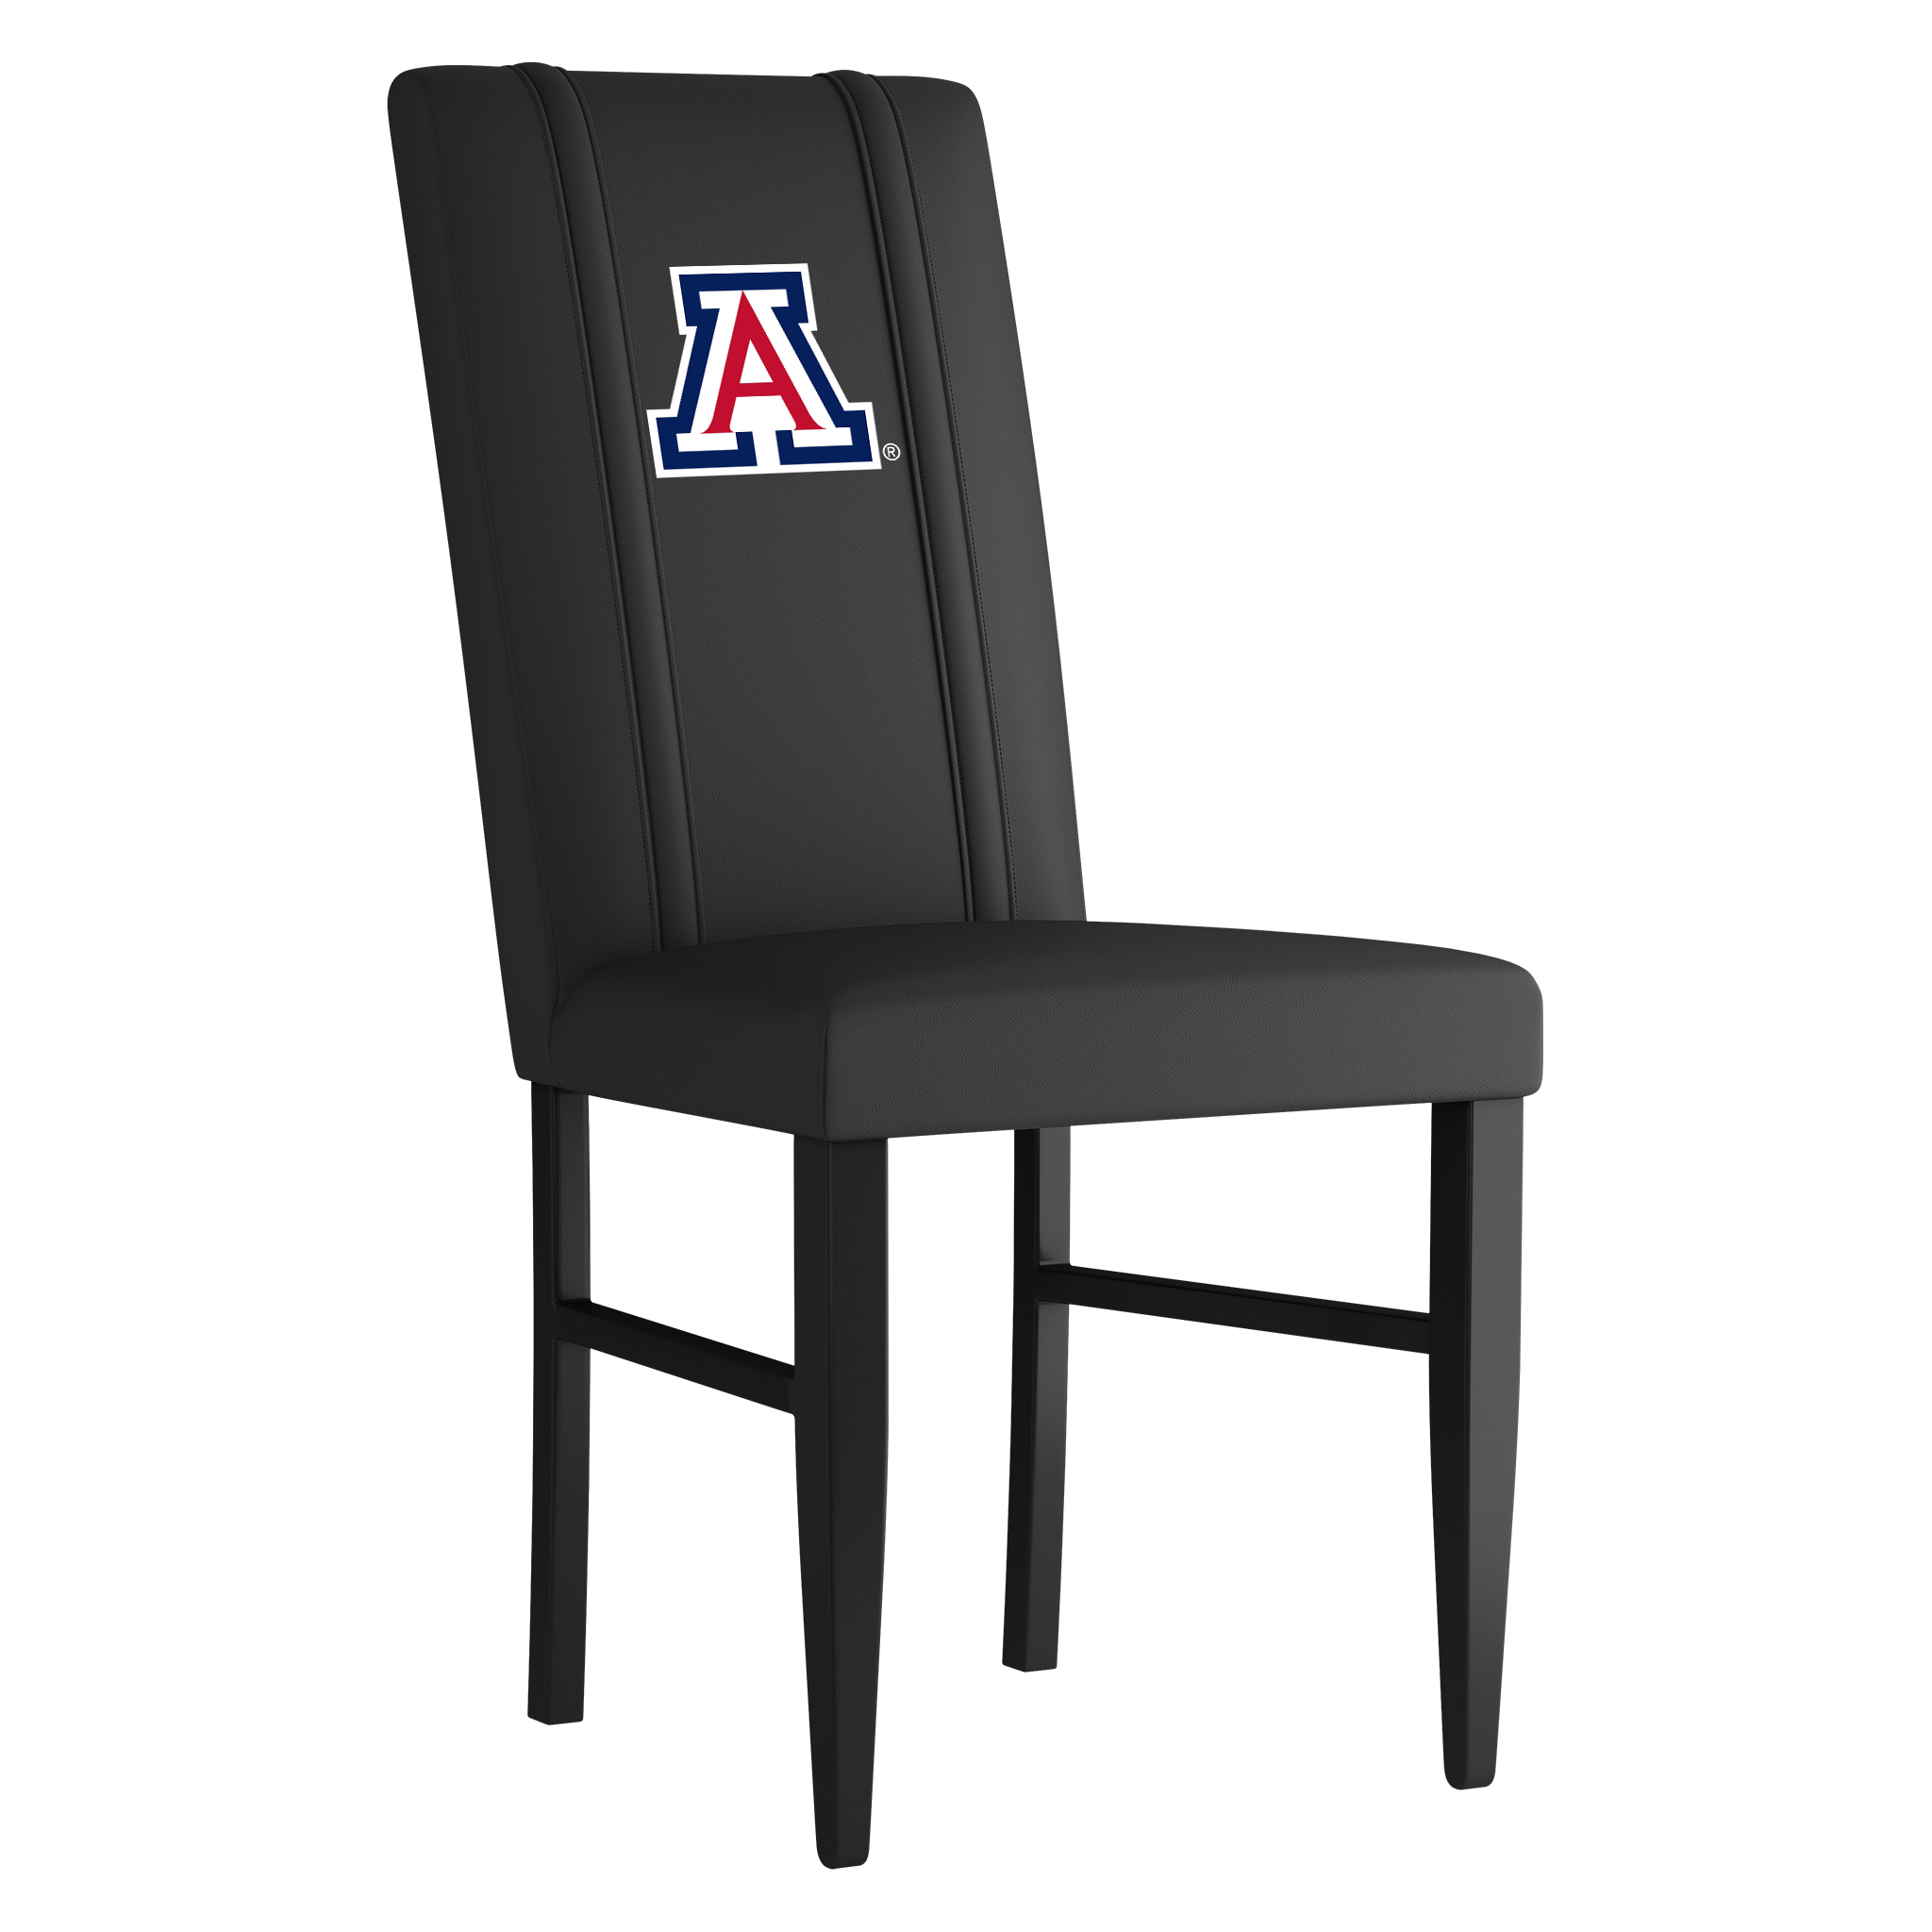 Arizona Wildcats Side Chair 2000 With Arizona Wildcats Logo